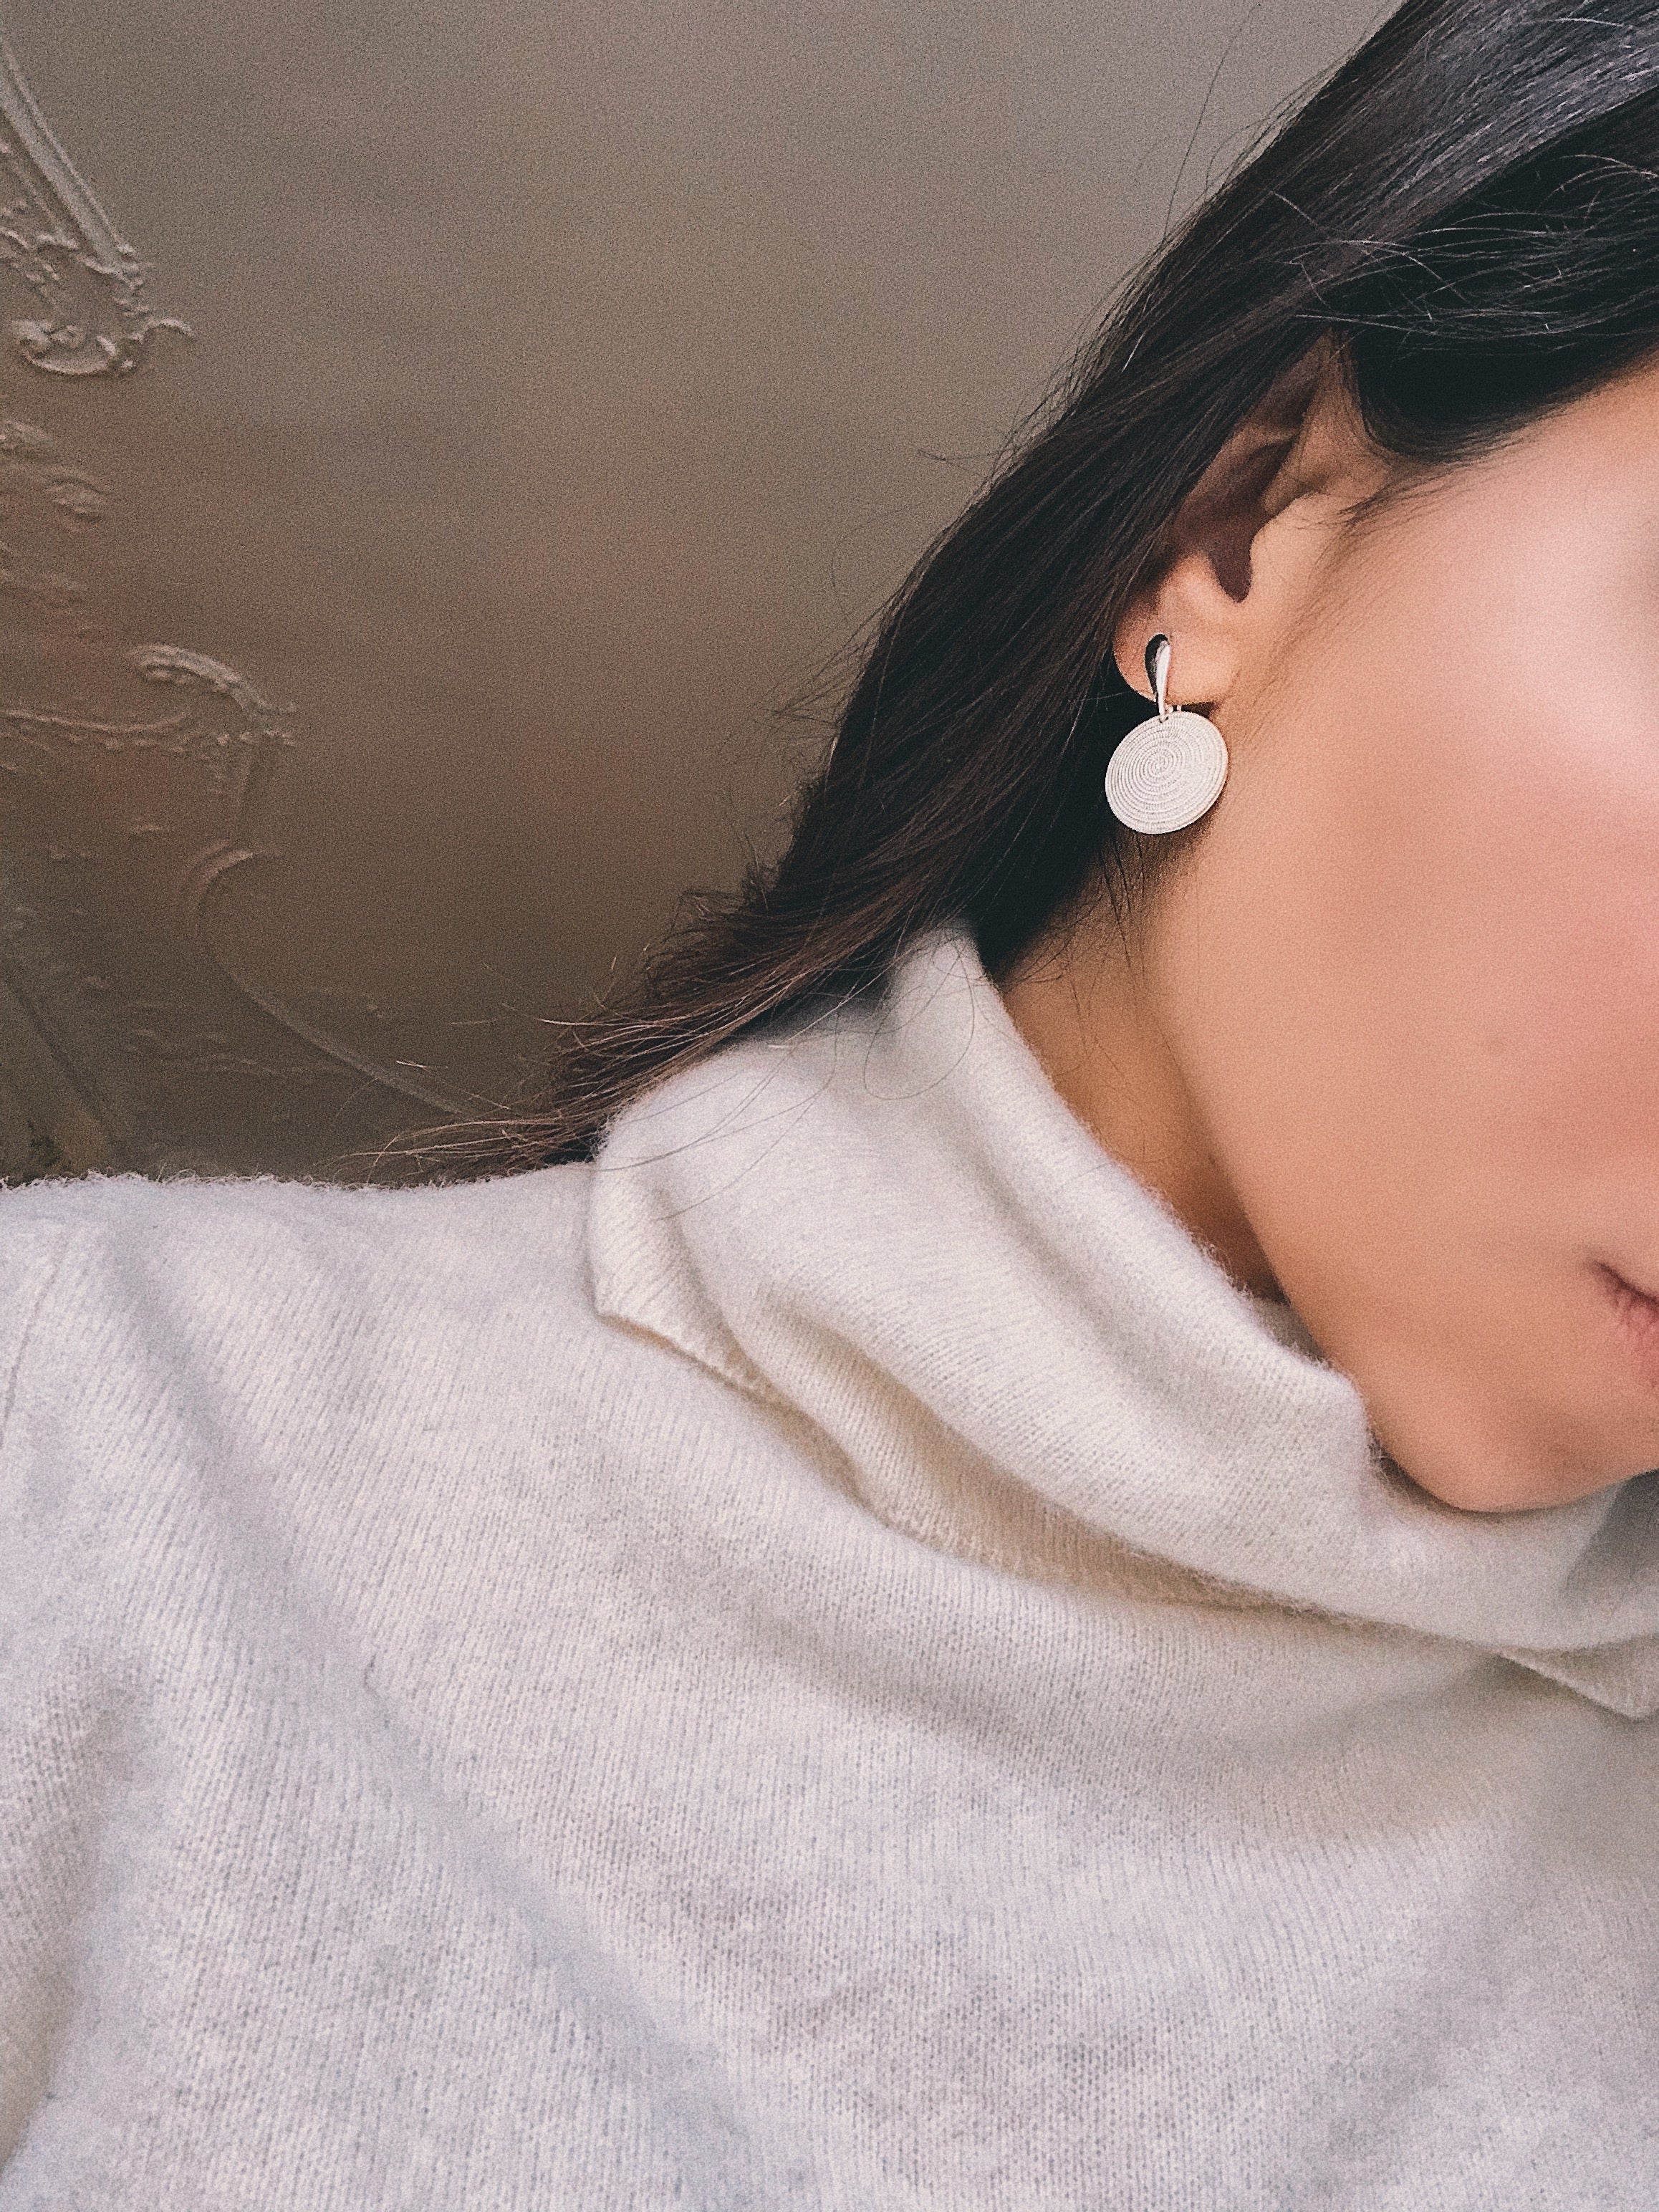 Earrings MAMITA - Watermark - Silver 925/1000 | Silver 925/1000 MEA AYAYA 